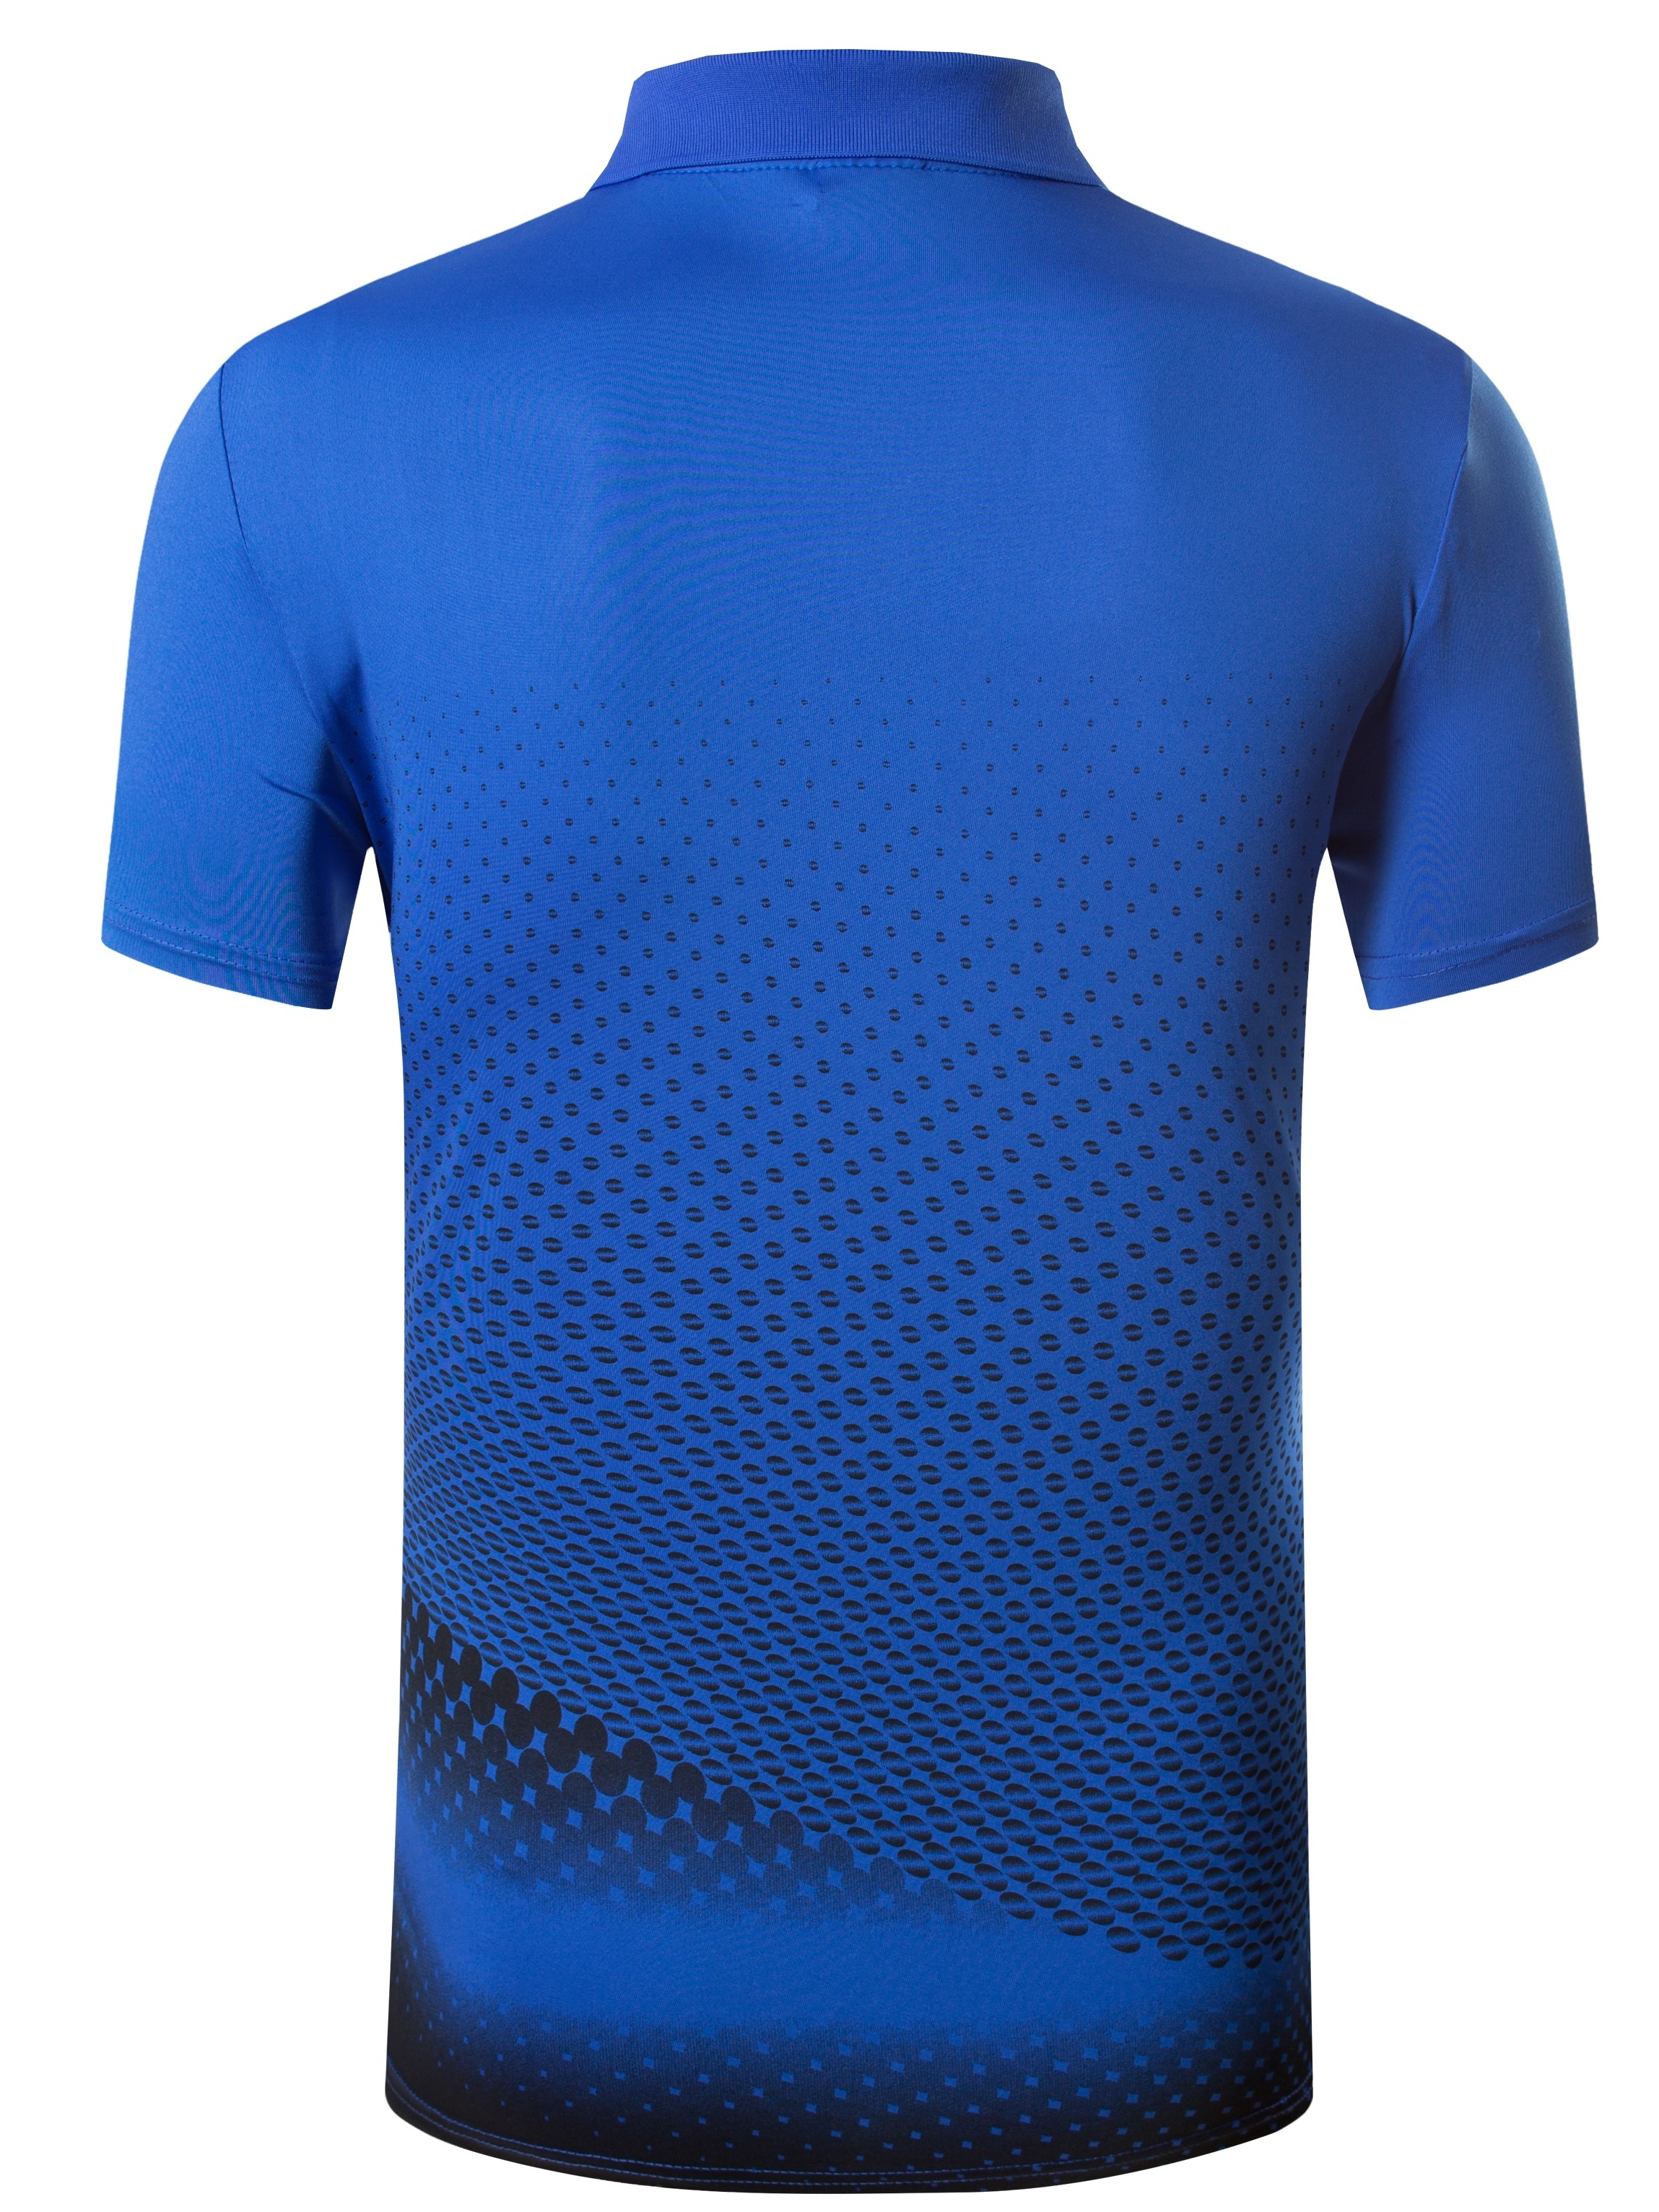 Adviicd Brown Magellan Shirts for Men Fashion Men's Golf Title Holder Short Sleeve Polo, Size: Medium